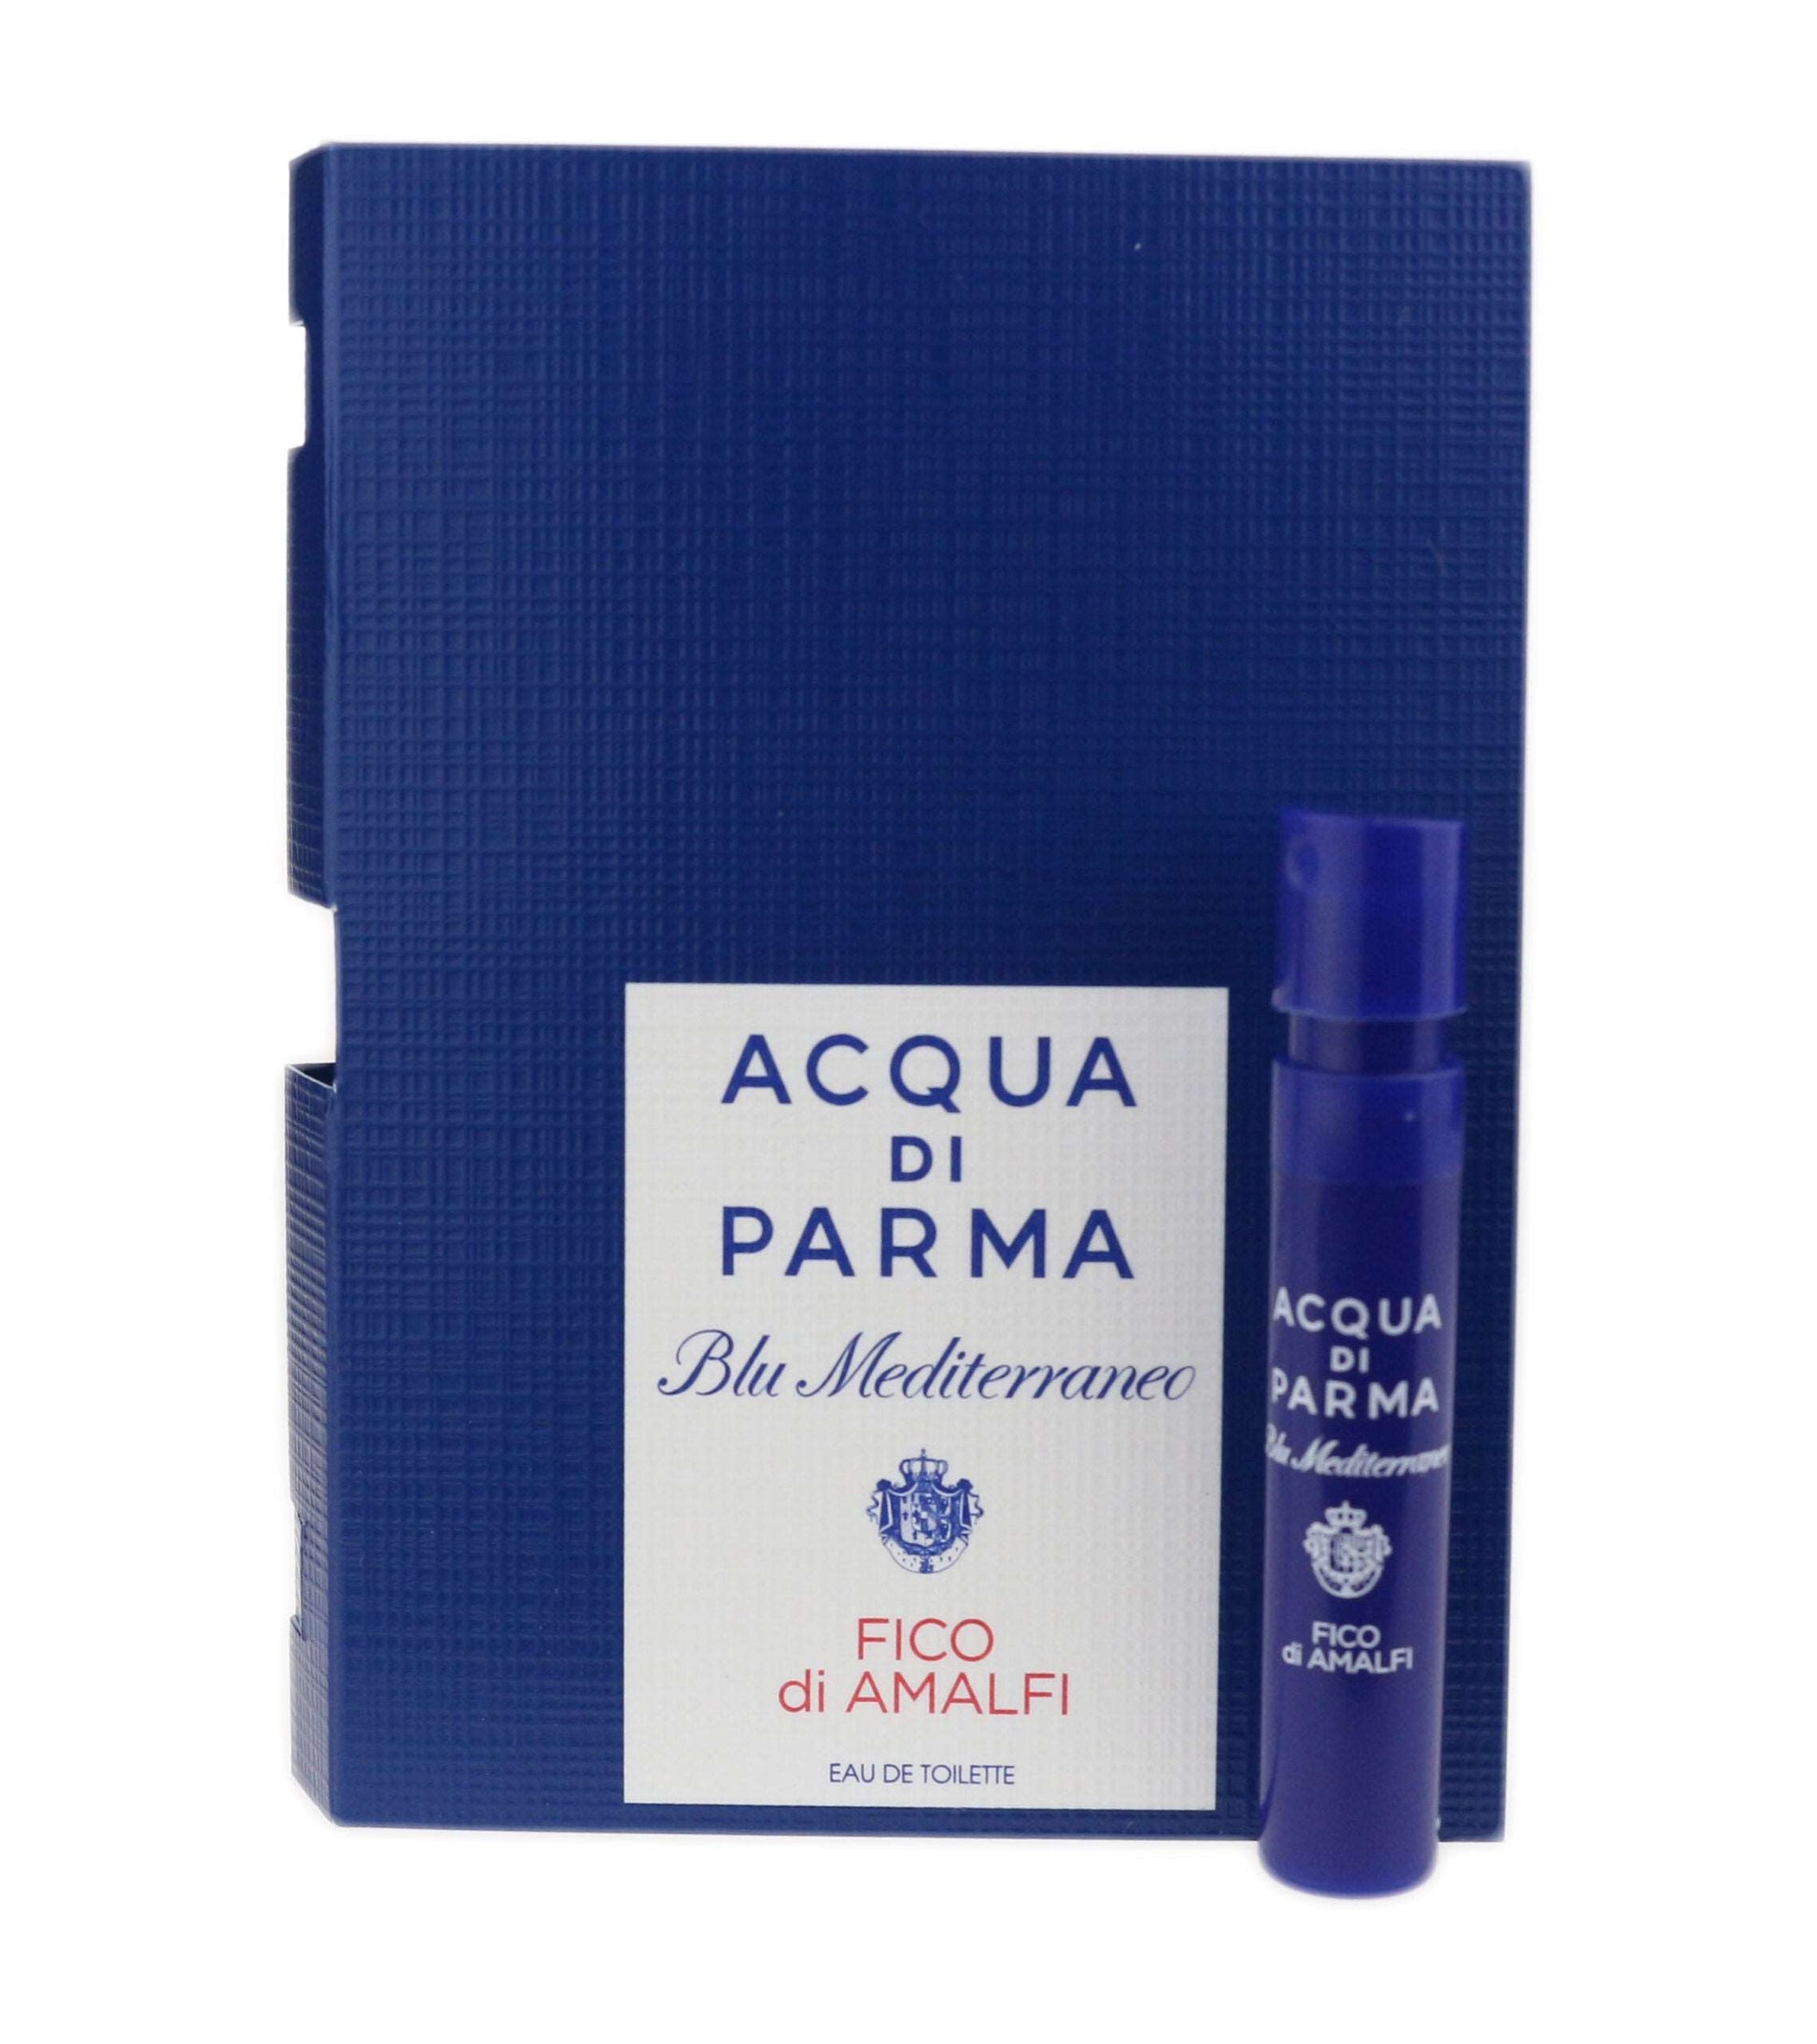 Acqua Di Parma Fico Di Amalfi 1.2 ml-0.04 fl.oz. hivatalos parfüm minták